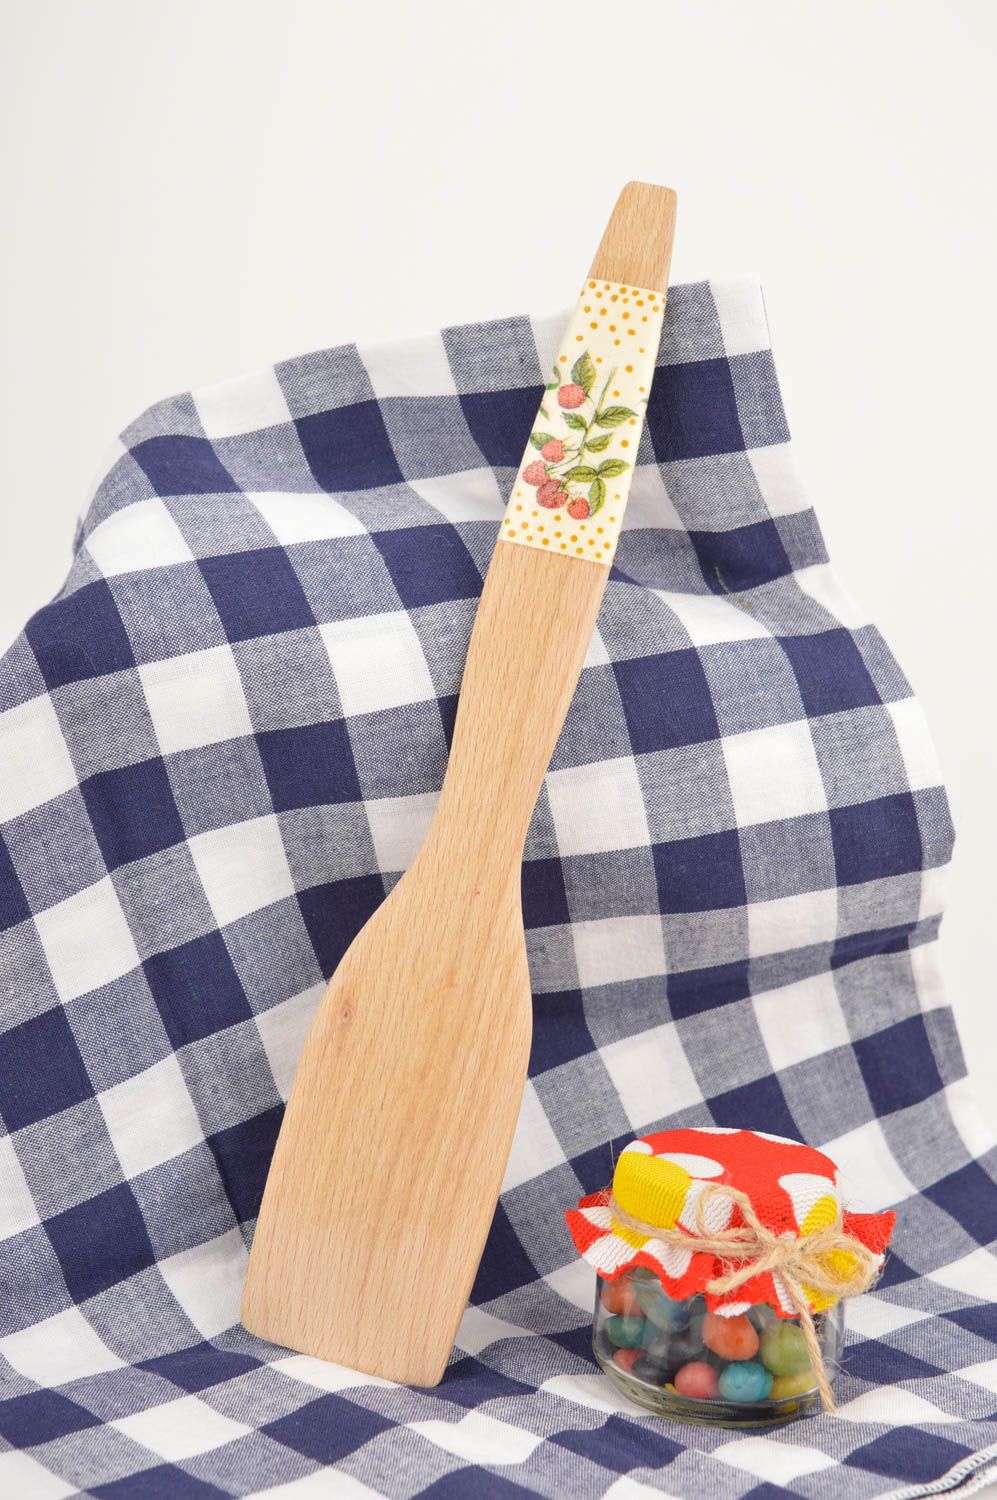 Unusual handmade wooden spatula decoupage ideas cooking tools wood craft photo 1